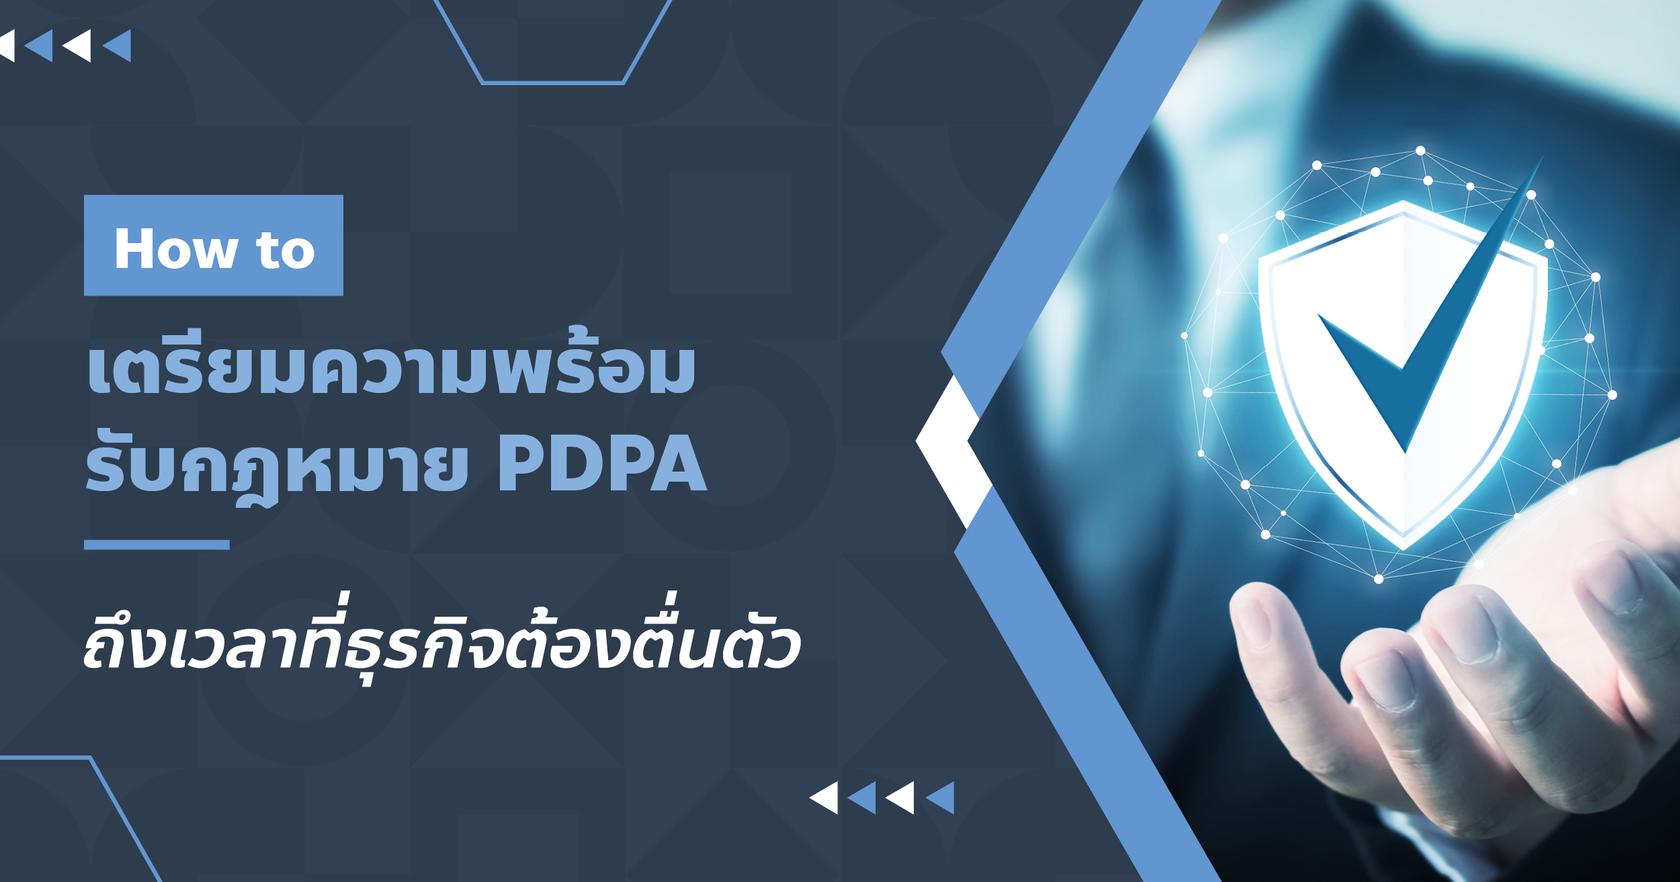 How to เตรียมความพร้อมรับกฎหมาย PDPA ถึงเวลาที่ธุรกิจต้องตื่นตัว